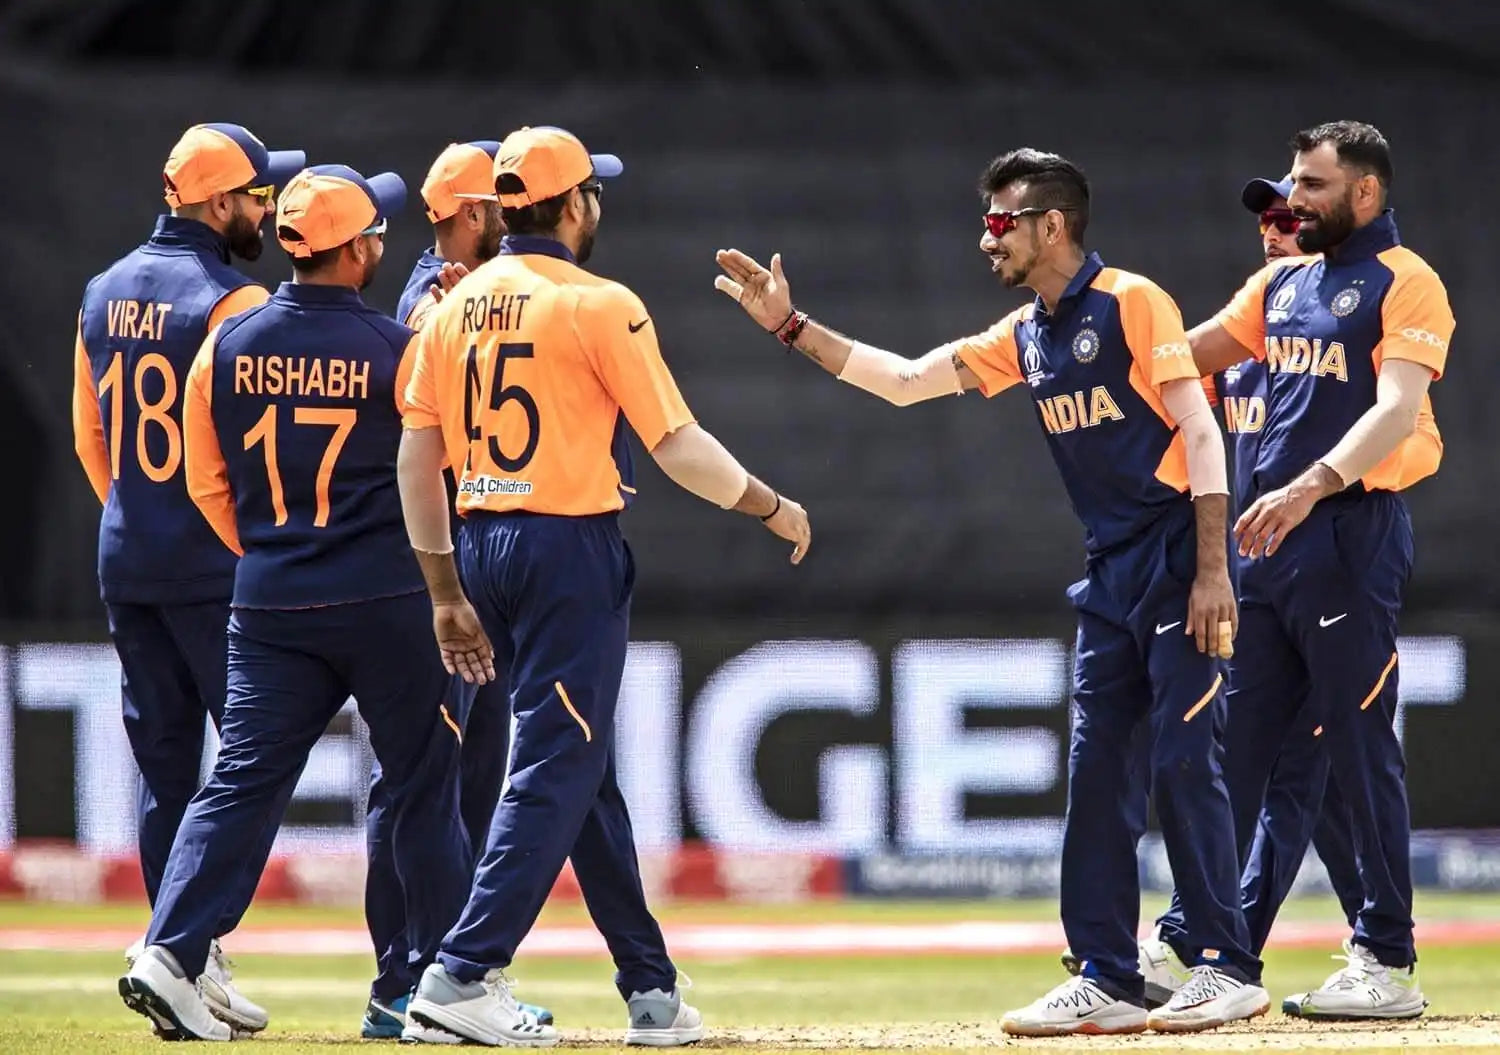 Indian Cricket Team's away orange jersey